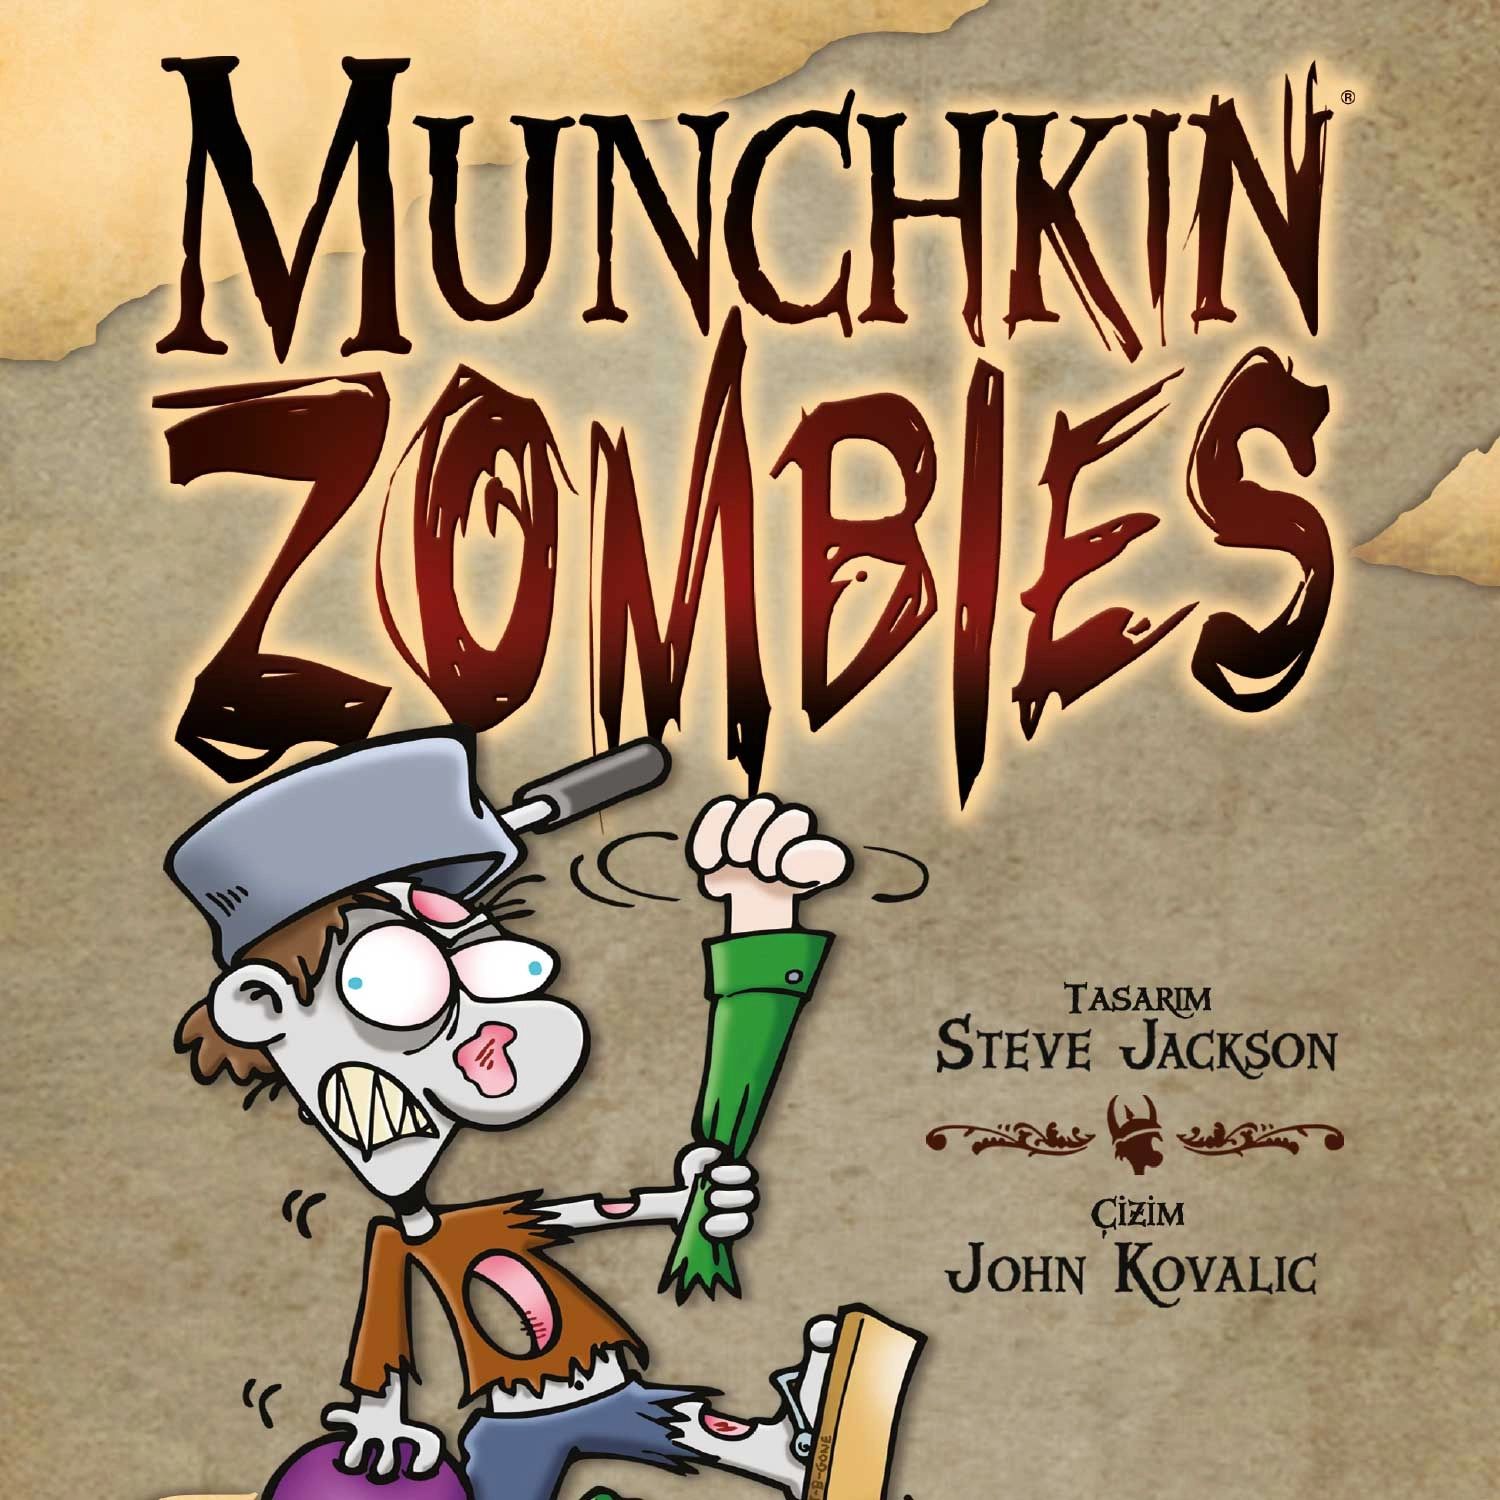 Munchkin - Zombies